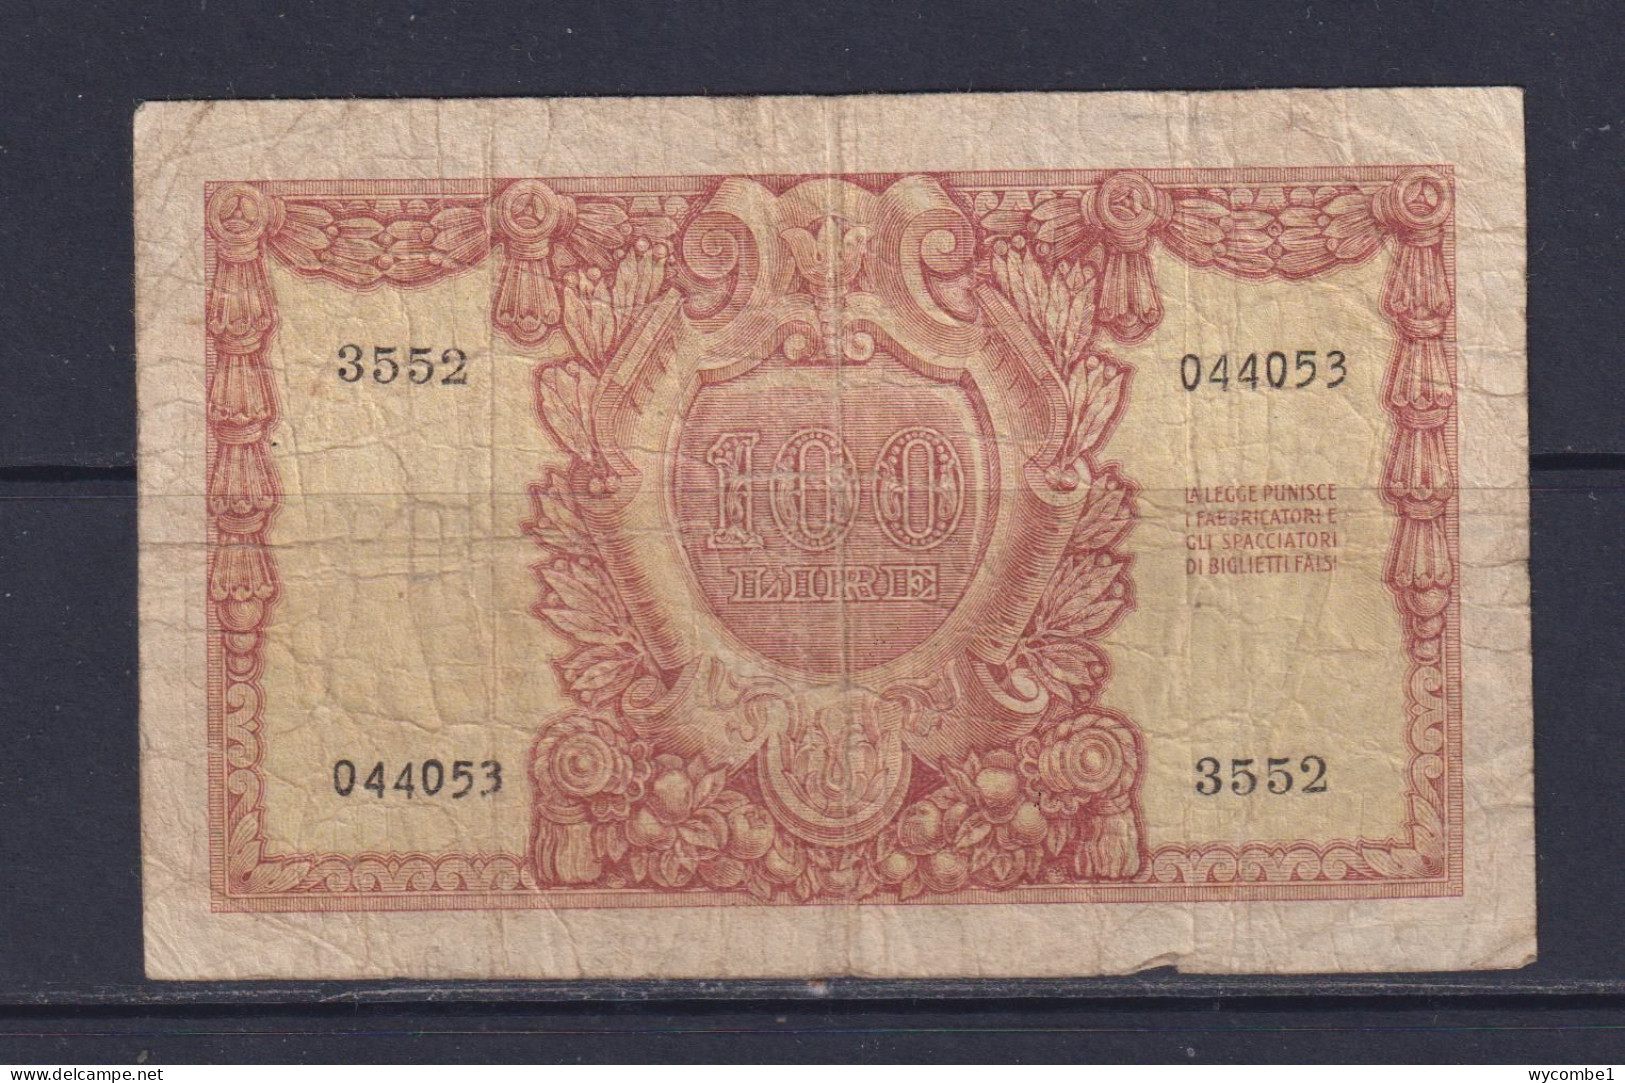 ITALY - 1951 100 Lira Circulated Banknote - 100 Liras